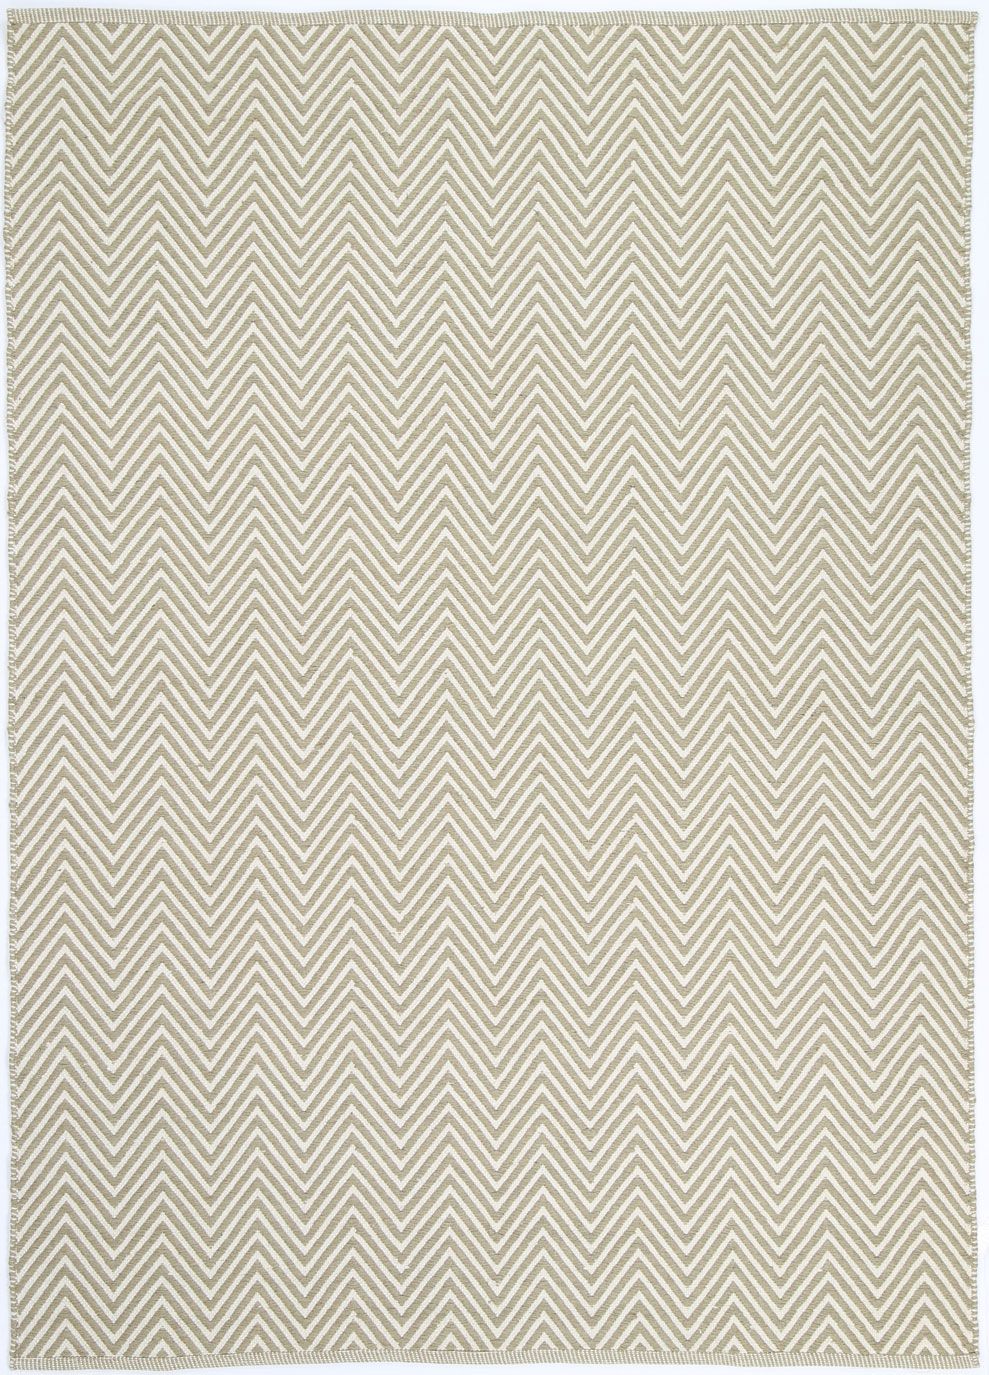 Natura Wool Limestone Beige Chevron Rug 120x170 cm